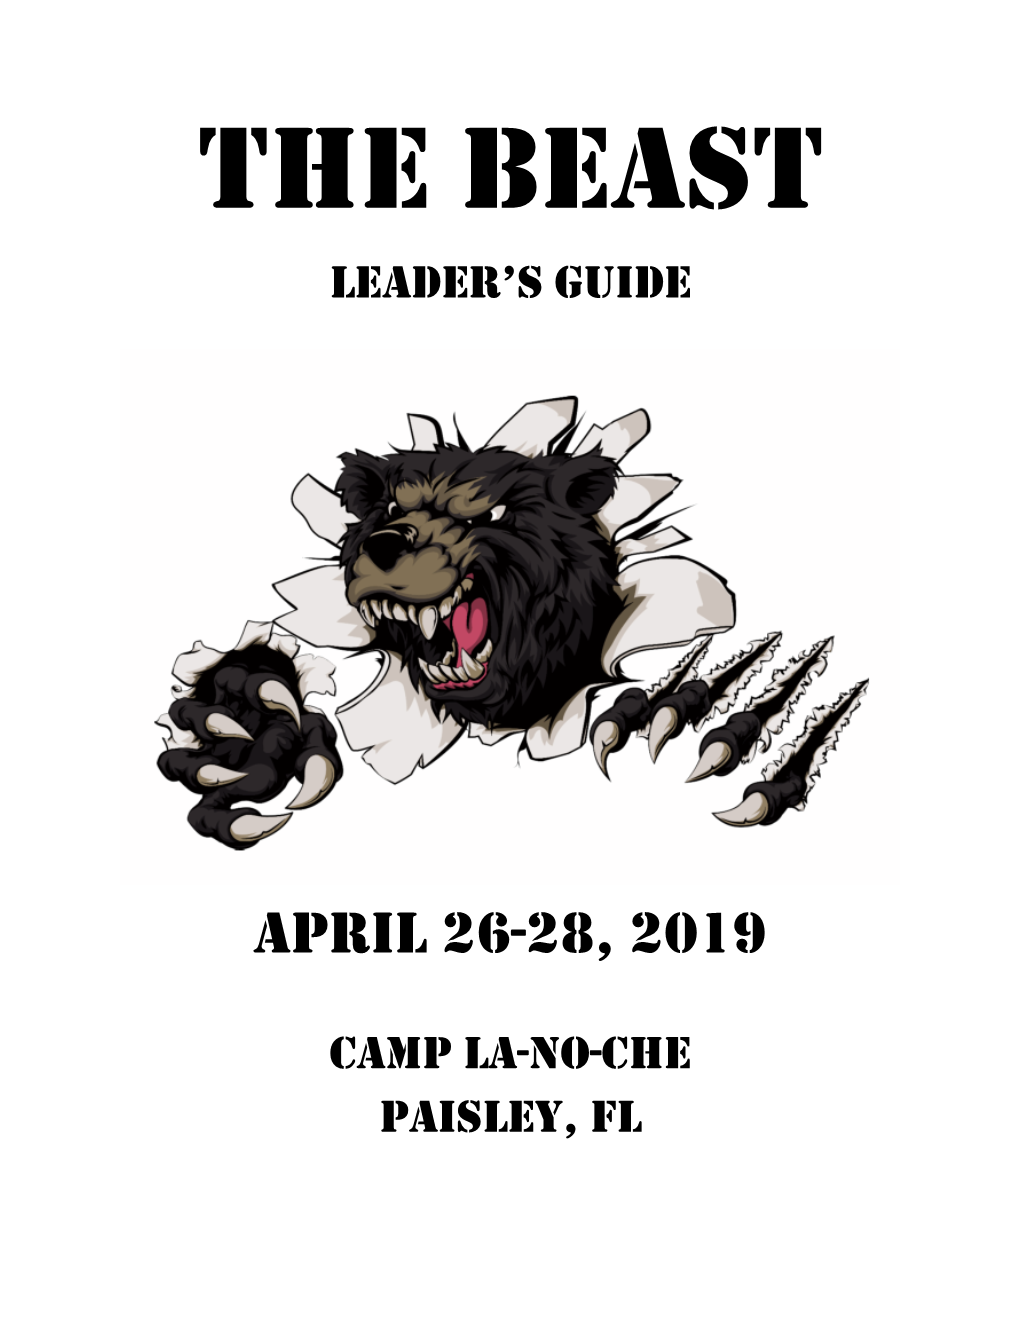 April 26-28, 2019